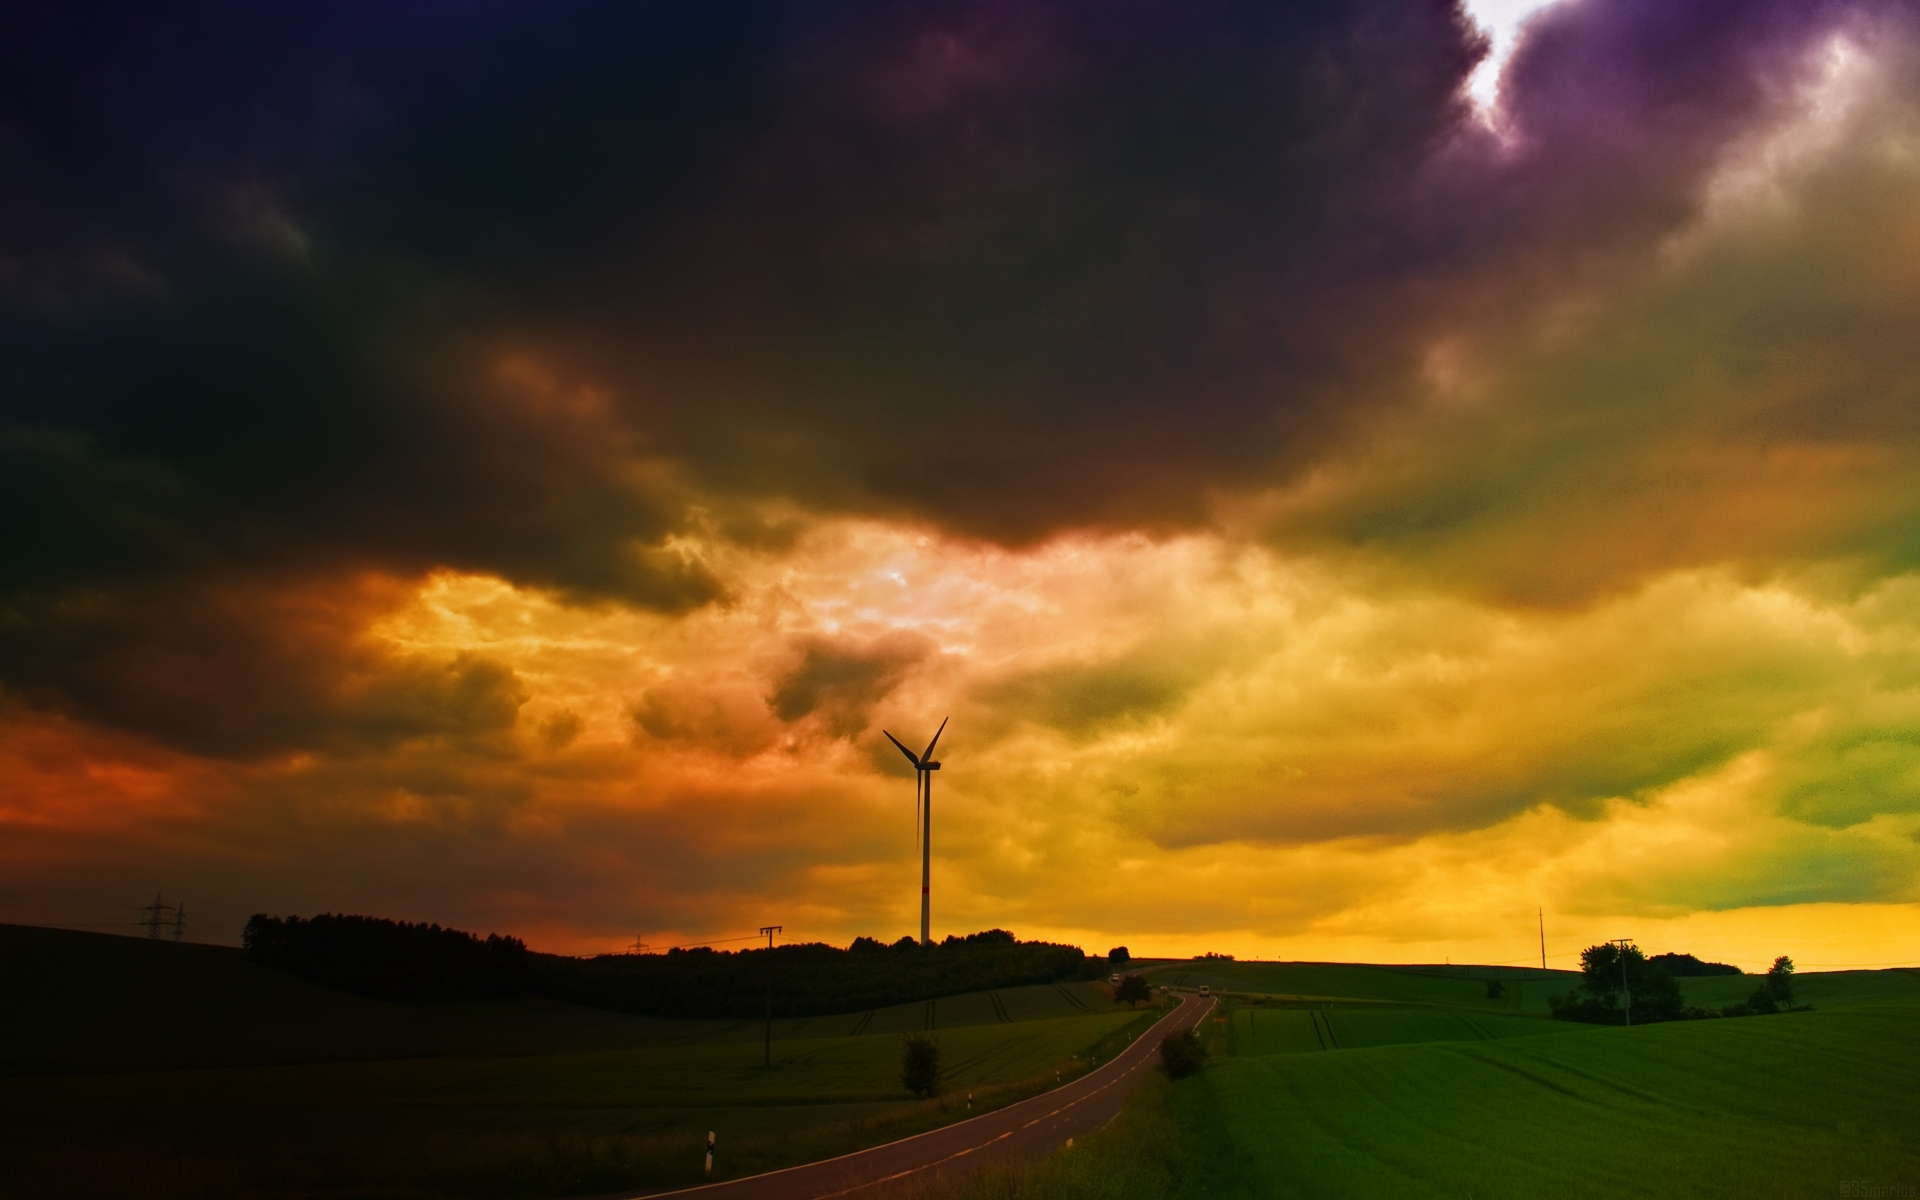 country, man made, road, cloud, sky, wind turbine